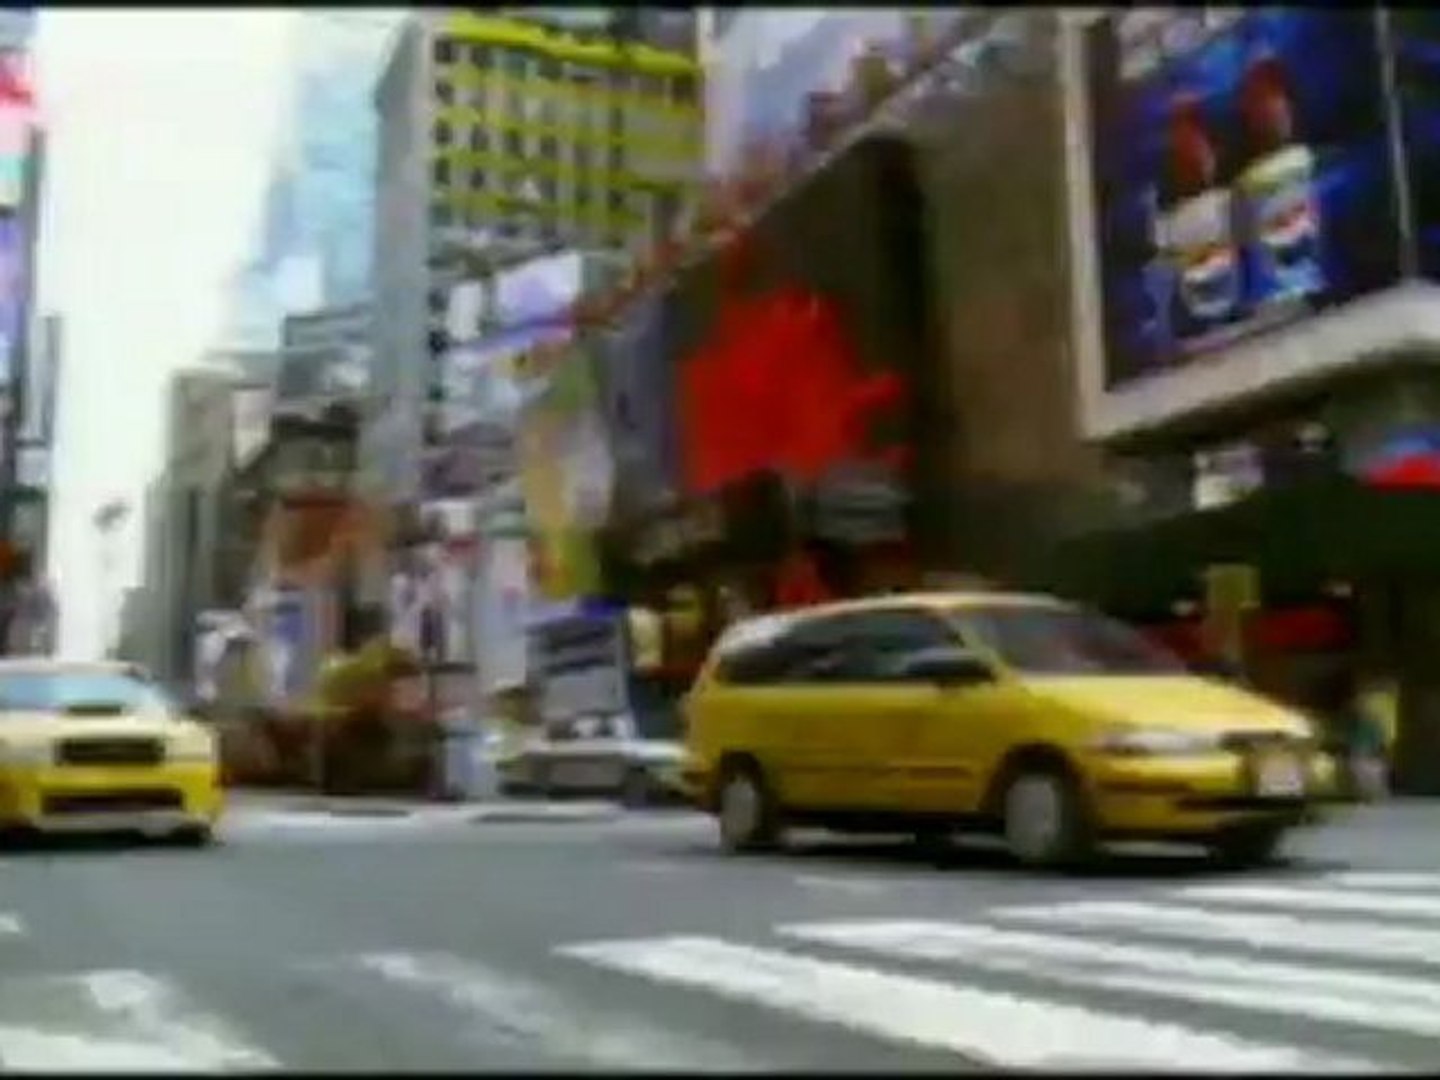 New York Taxi - Film 2004 